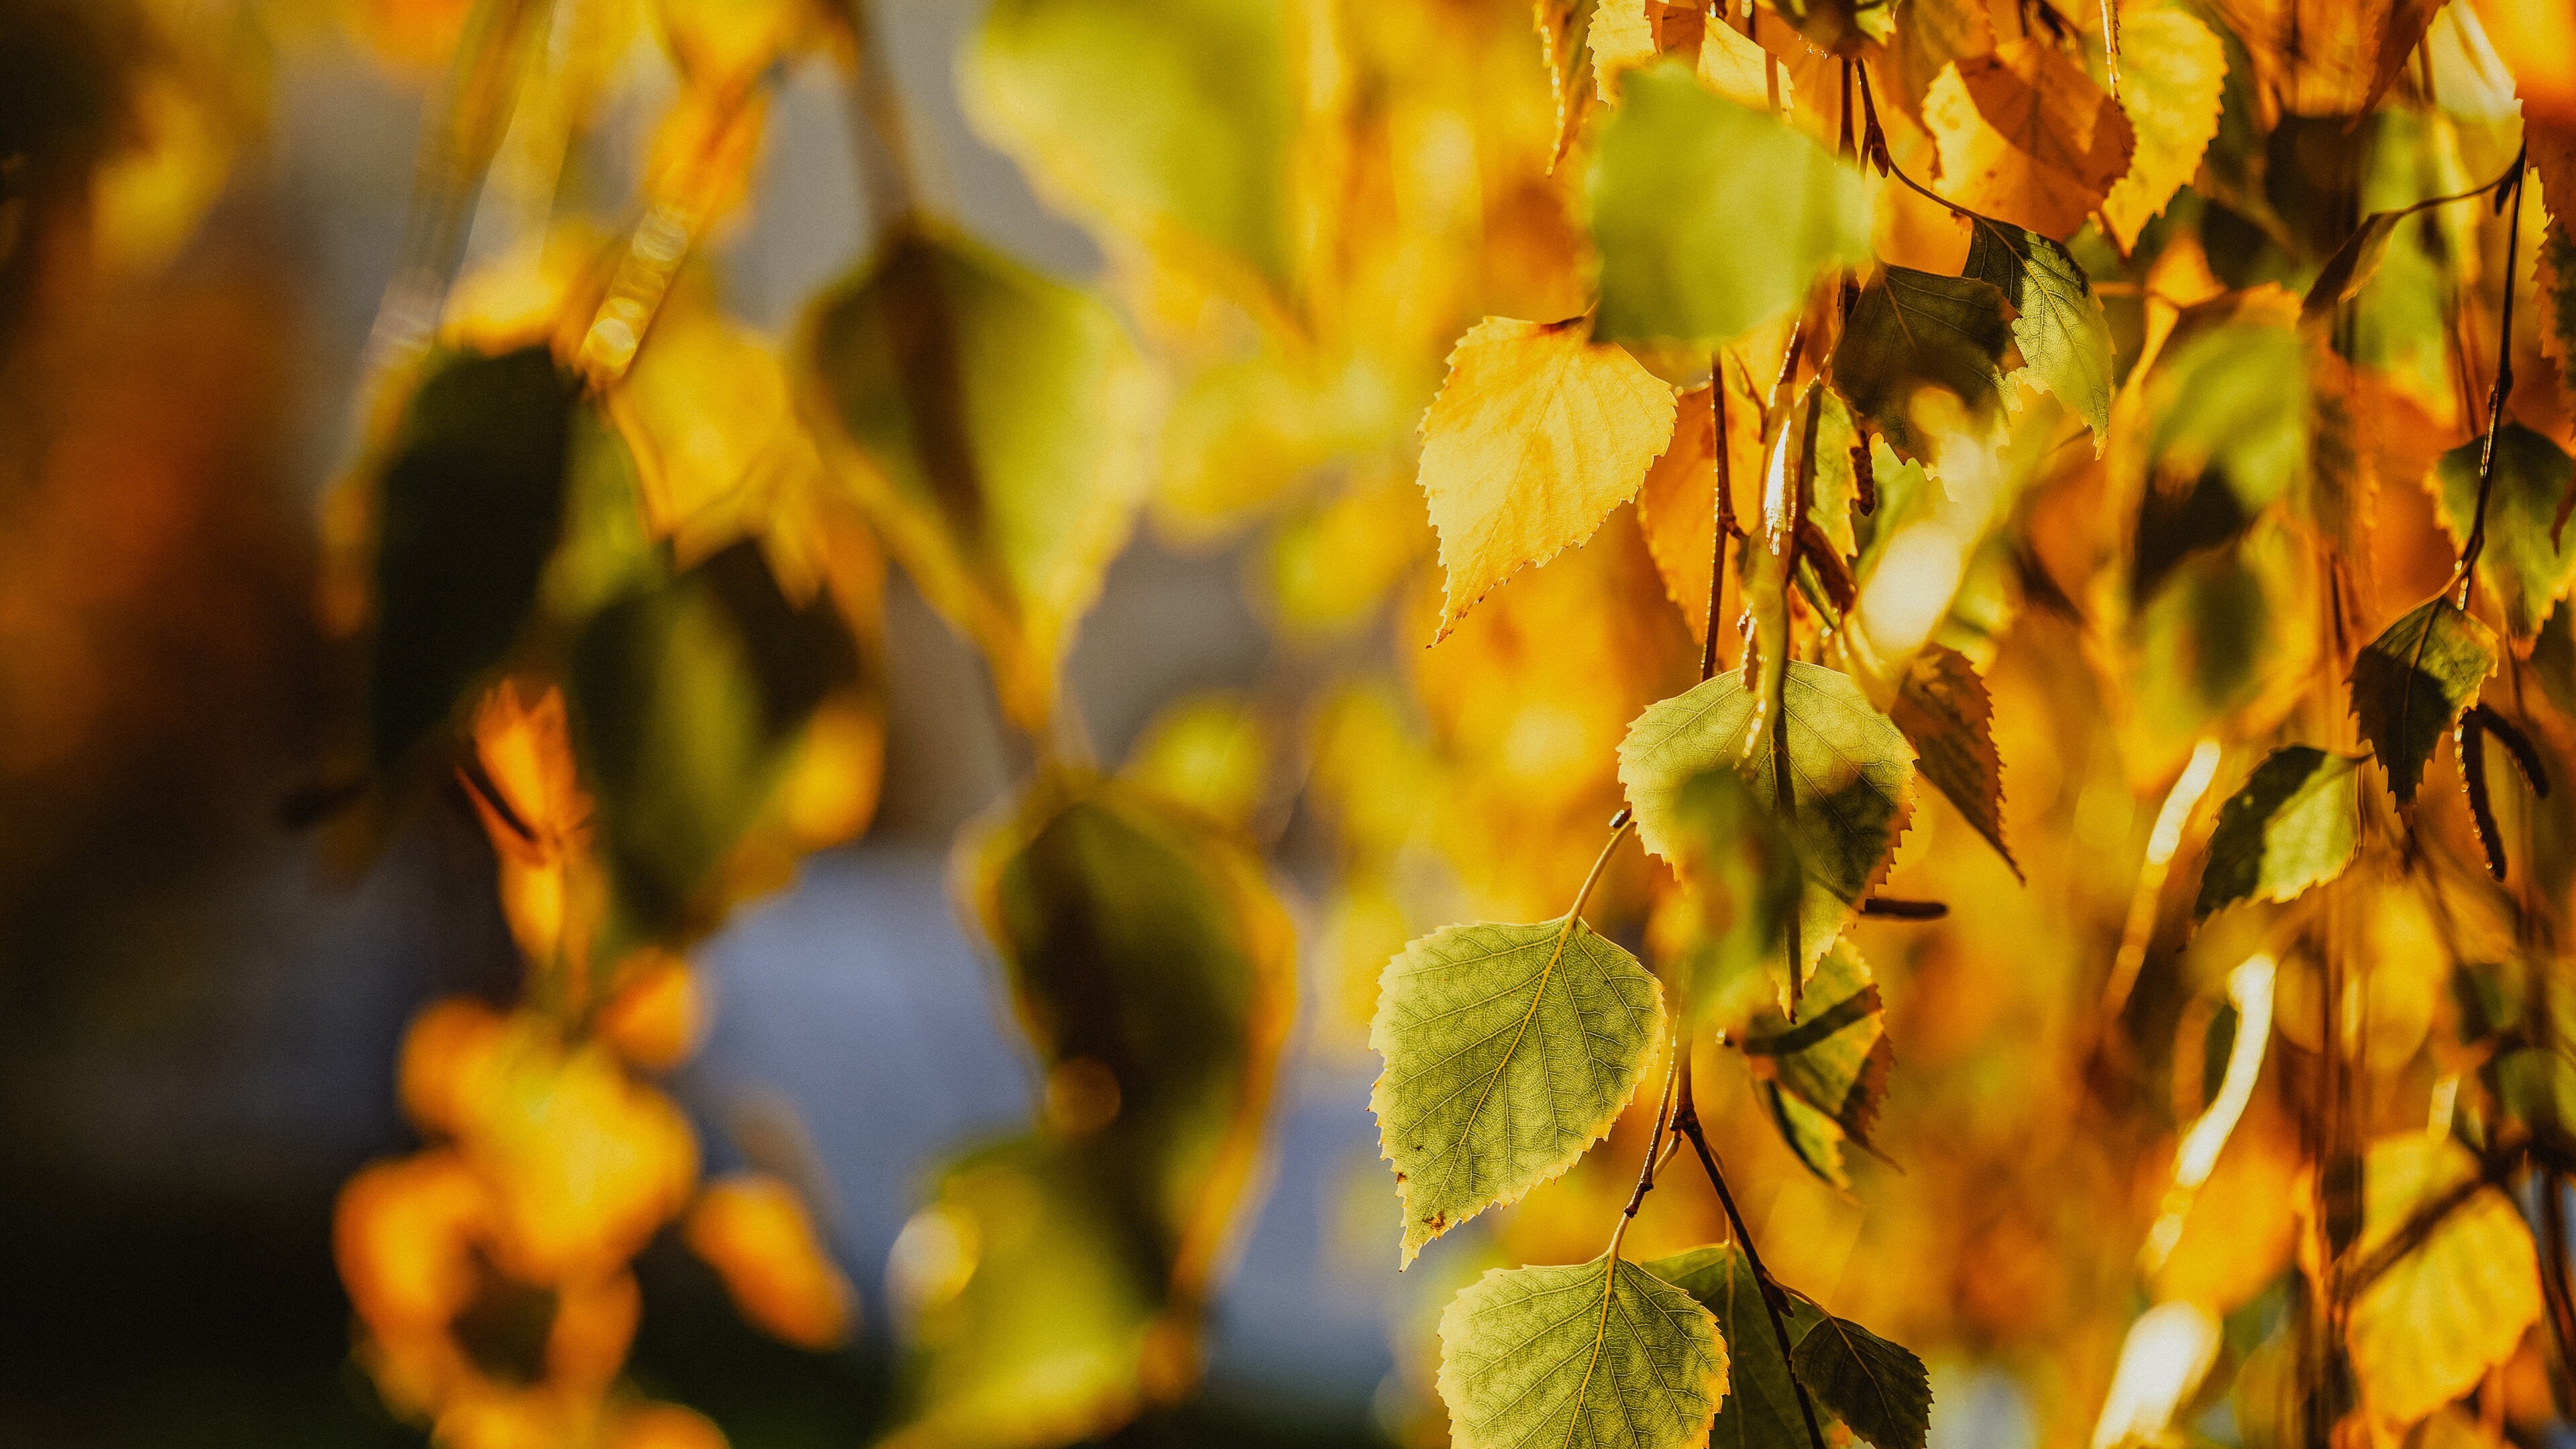 Gold Leaf: Yellowish color of birch foliage in autumn, Chlorophyll breakdown, A catabolic process of foliage senescence. 3840x2160 4K Wallpaper.